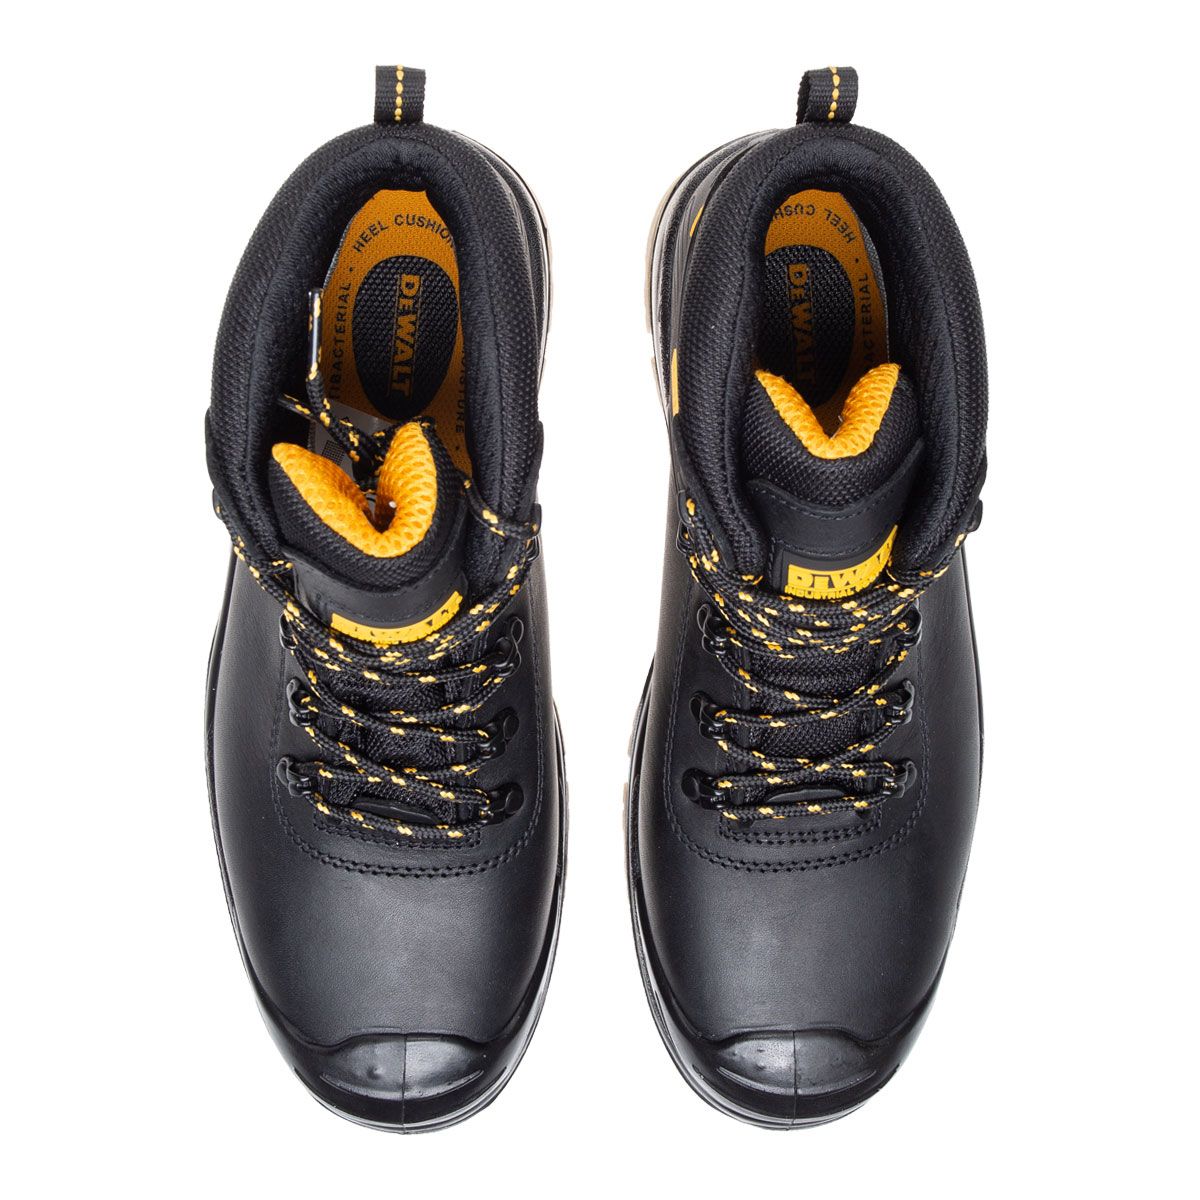 DeWalt Newark Men's Black Safety boots, Size 10